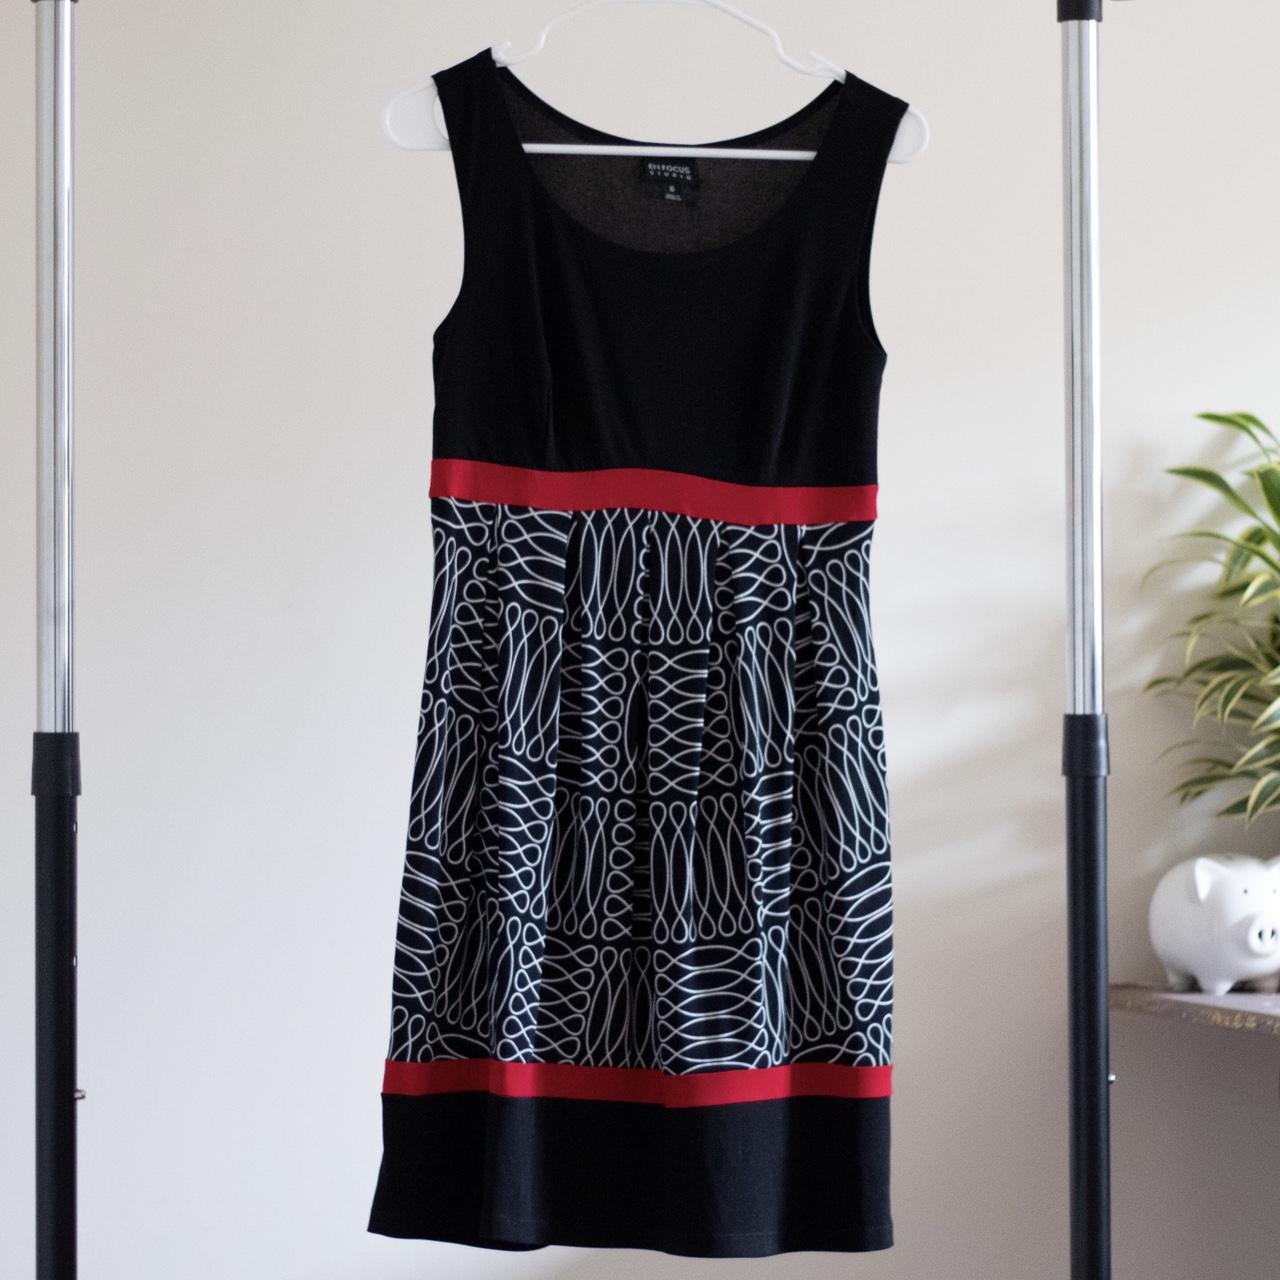 Enfocus Studio Women's Black and Red Dress (3)